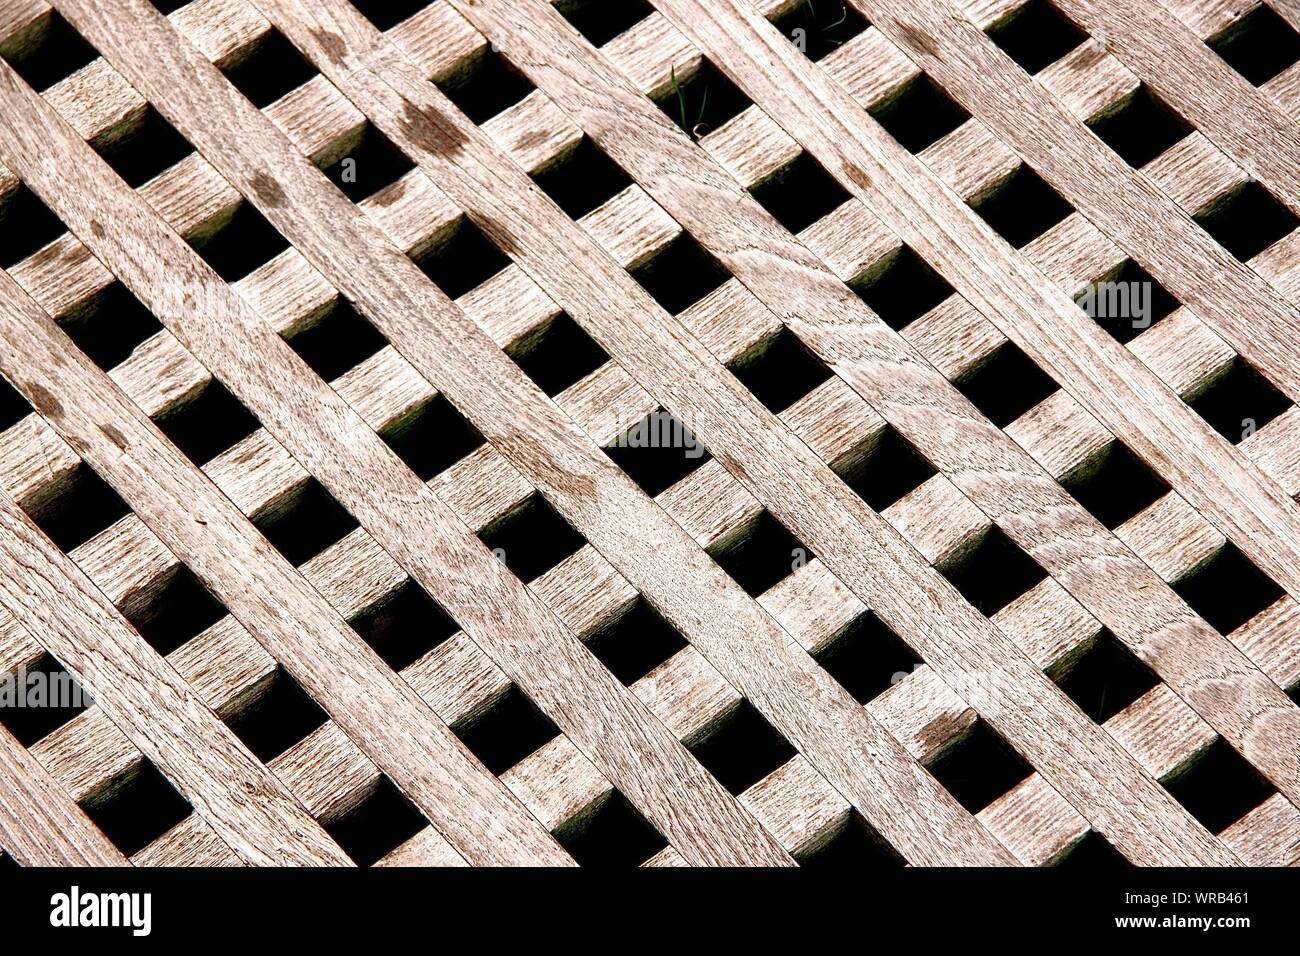 Detail Shot Of Criss Cross Wooden Surface Stock Photo